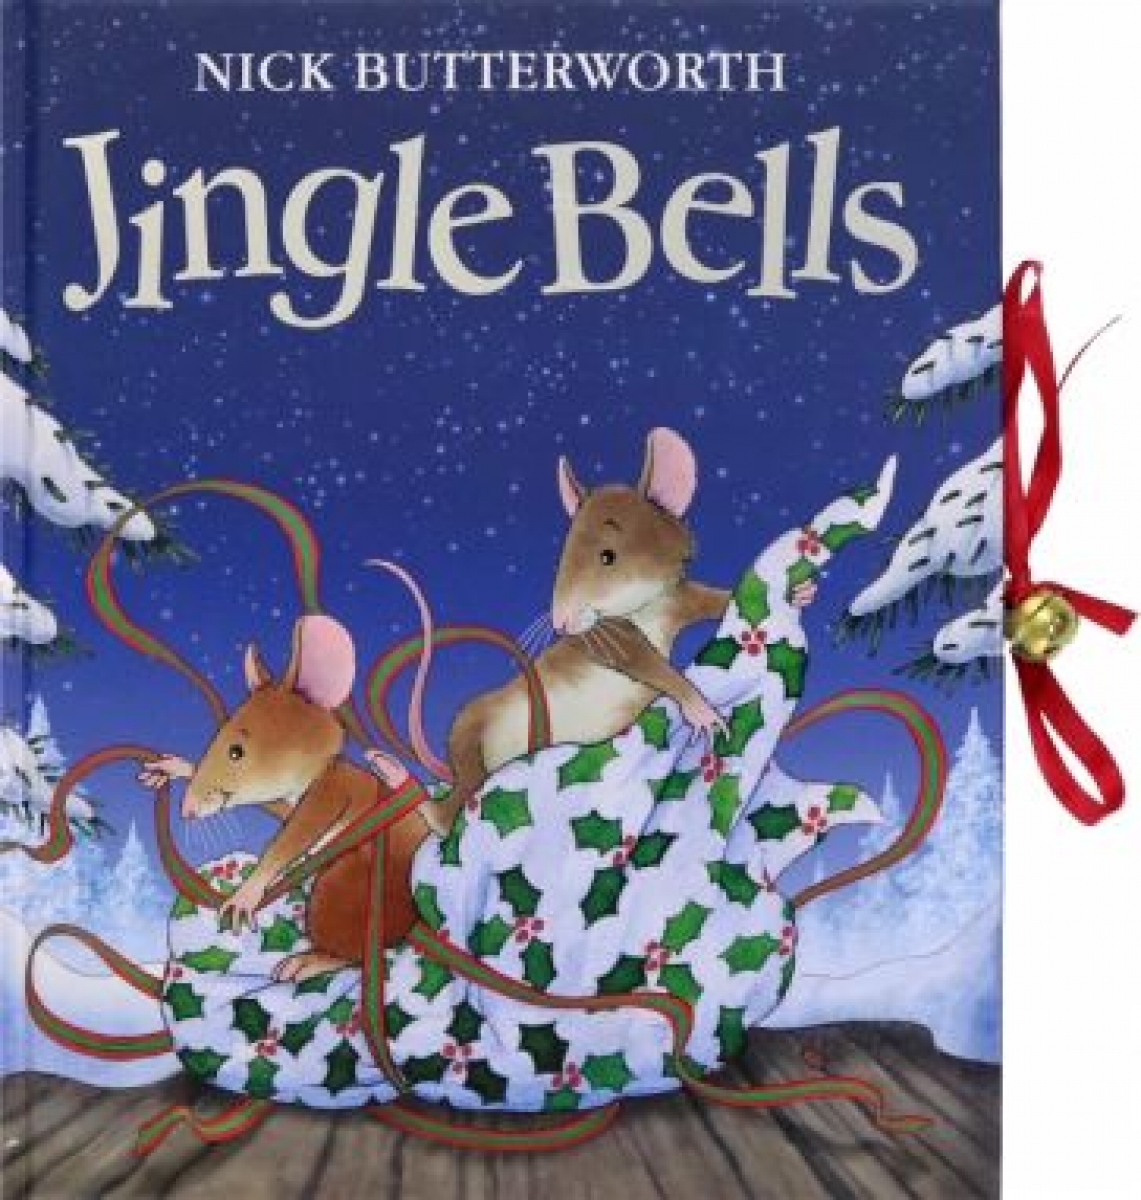 Butterworth Nick Jingle Bells 